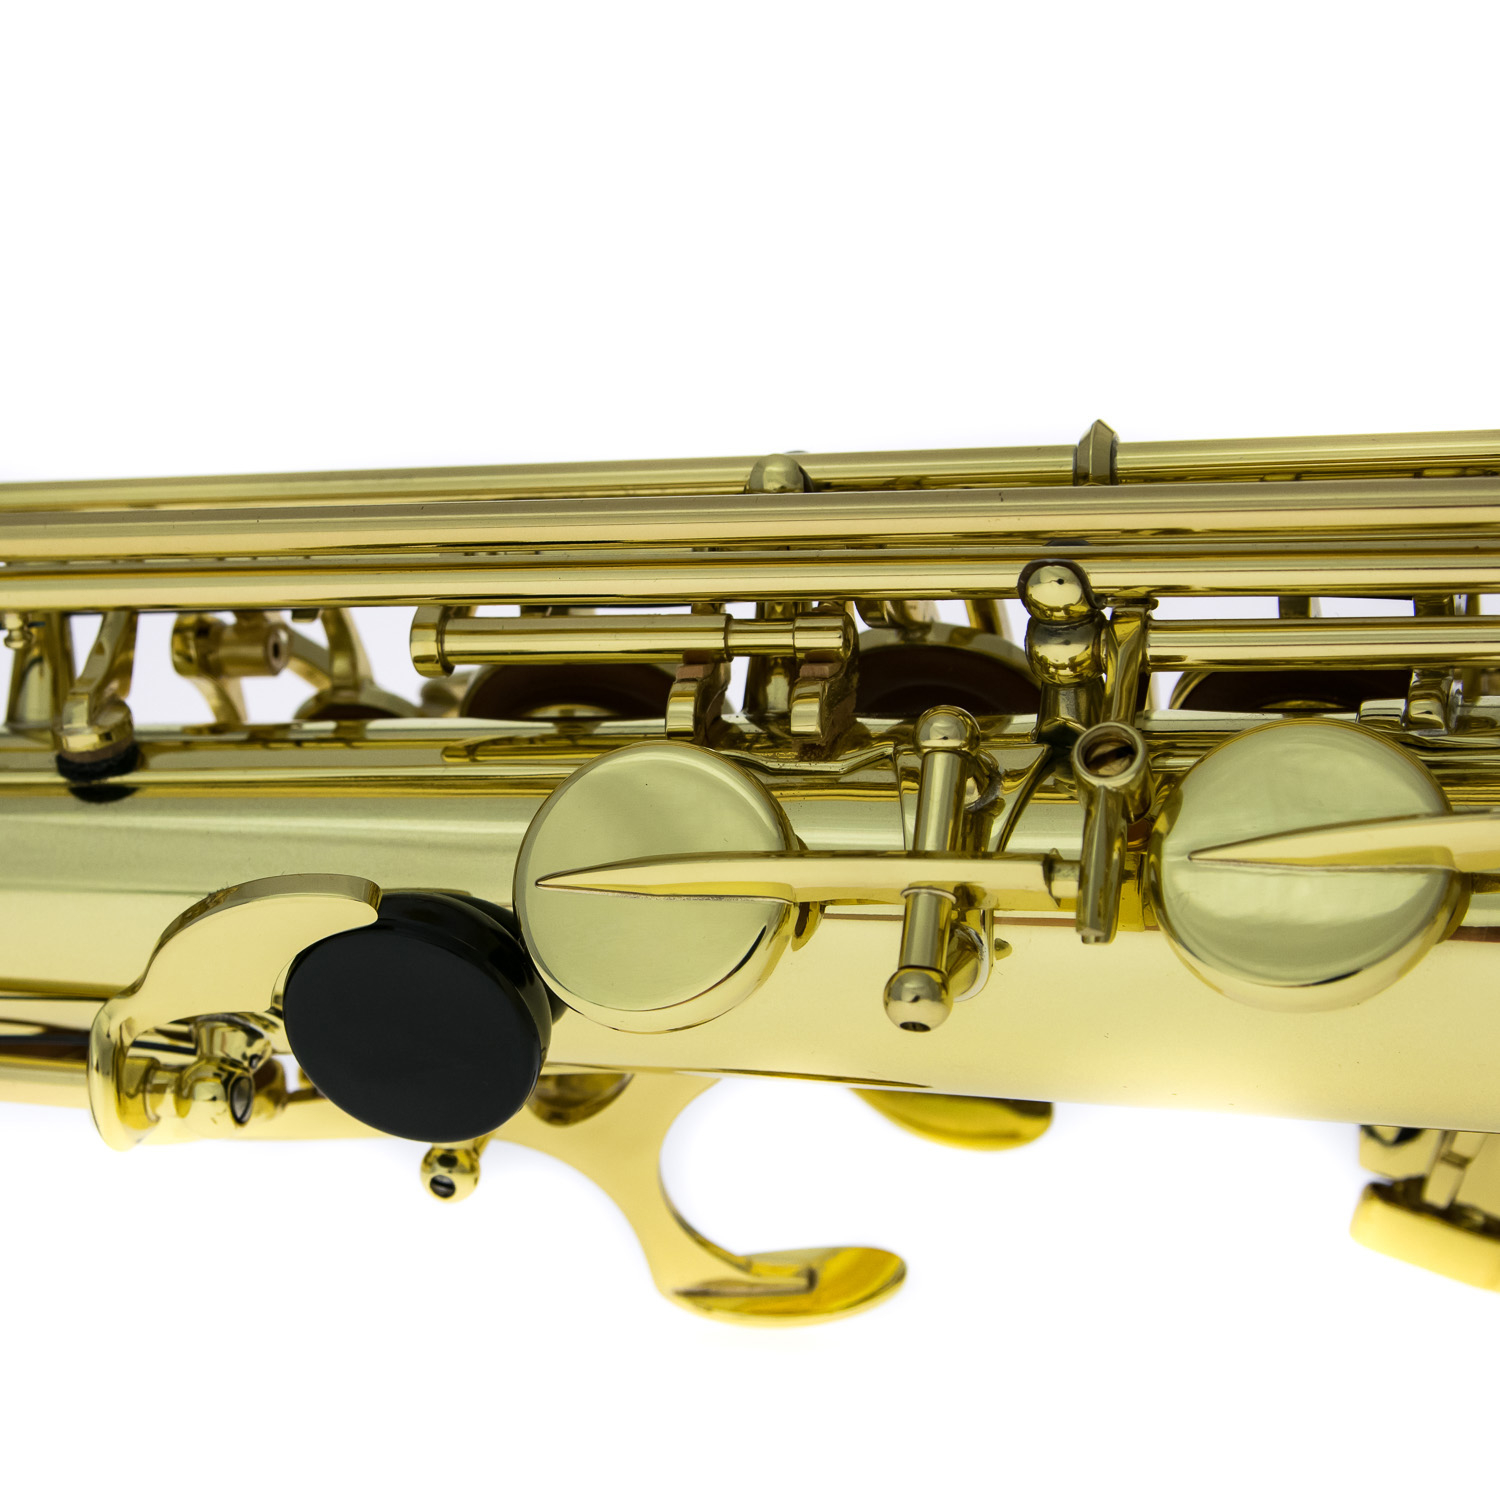 Selmer Axos Alto Saxophone